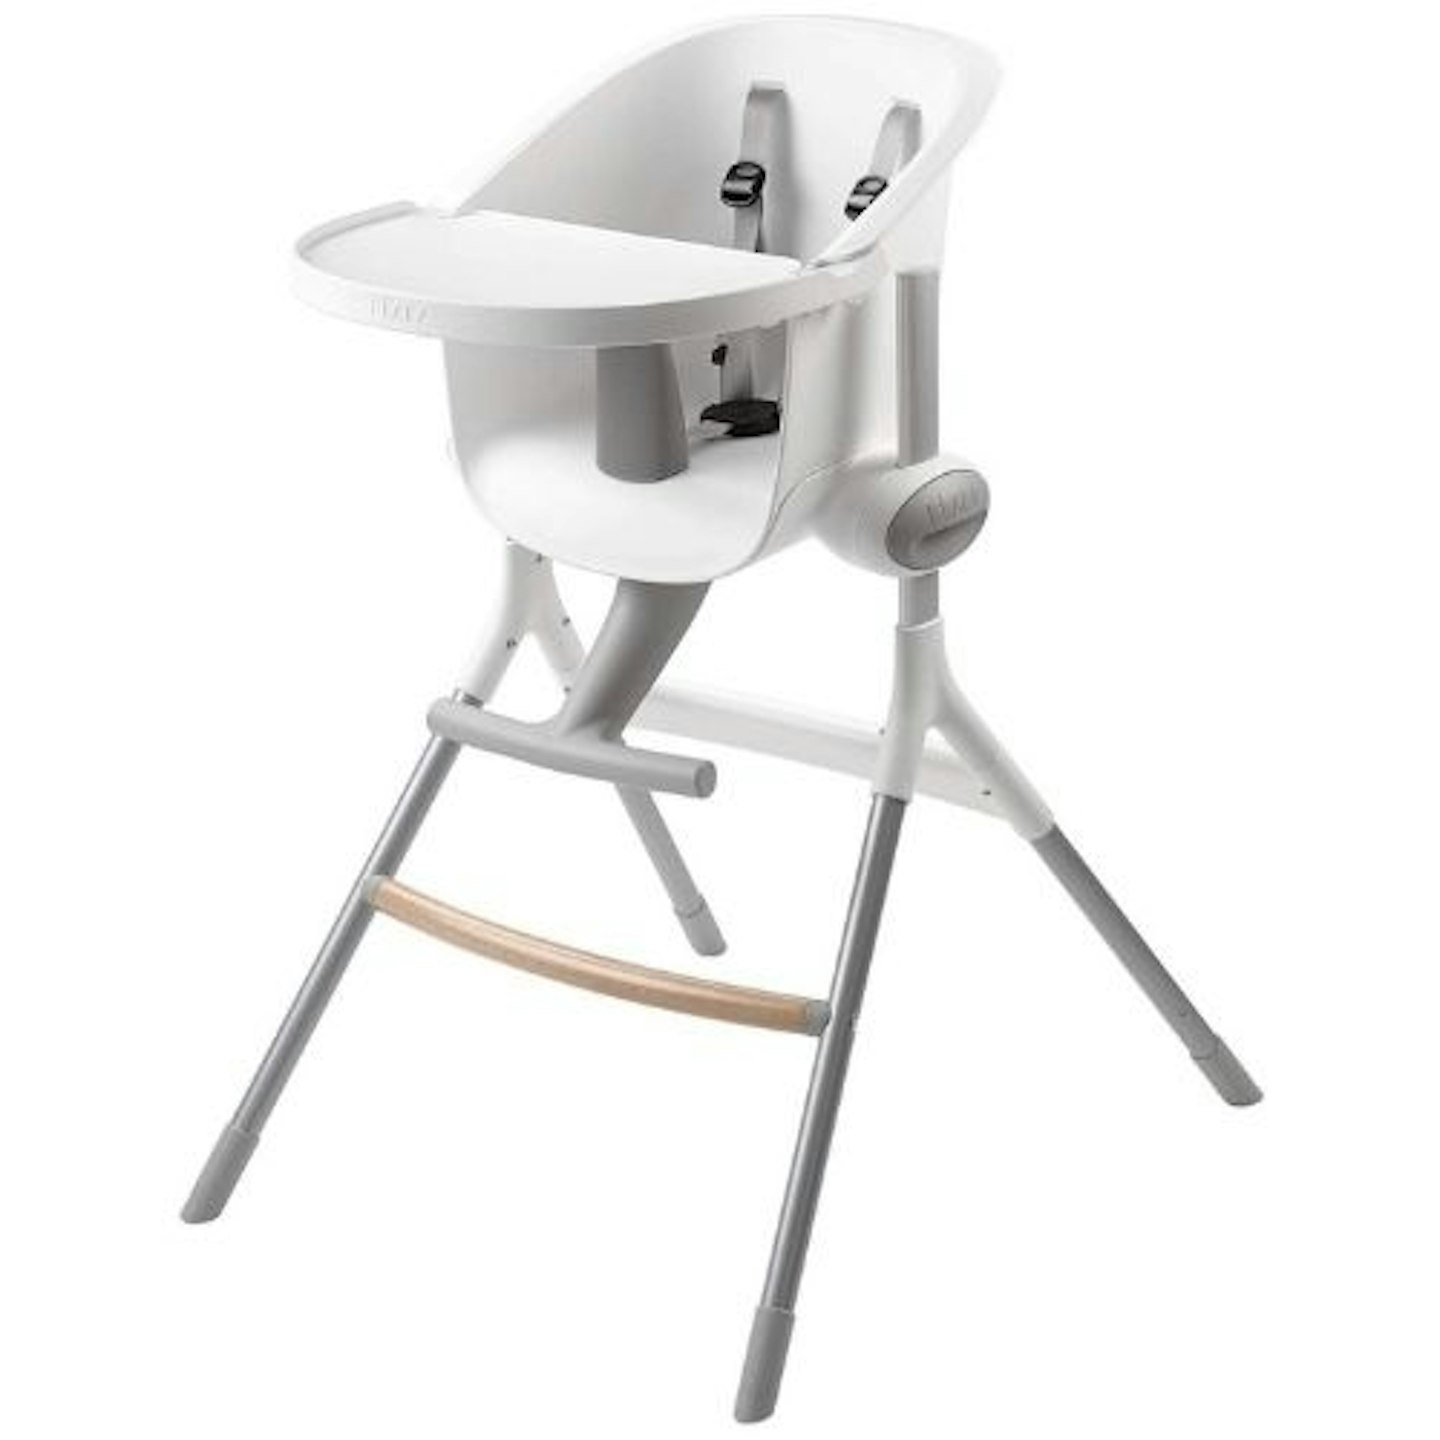 Childhome Evolu ONE.80° Chair - White Evolutive High Chair and Kids Chair -  Swivel Seat! unisex (bambini)